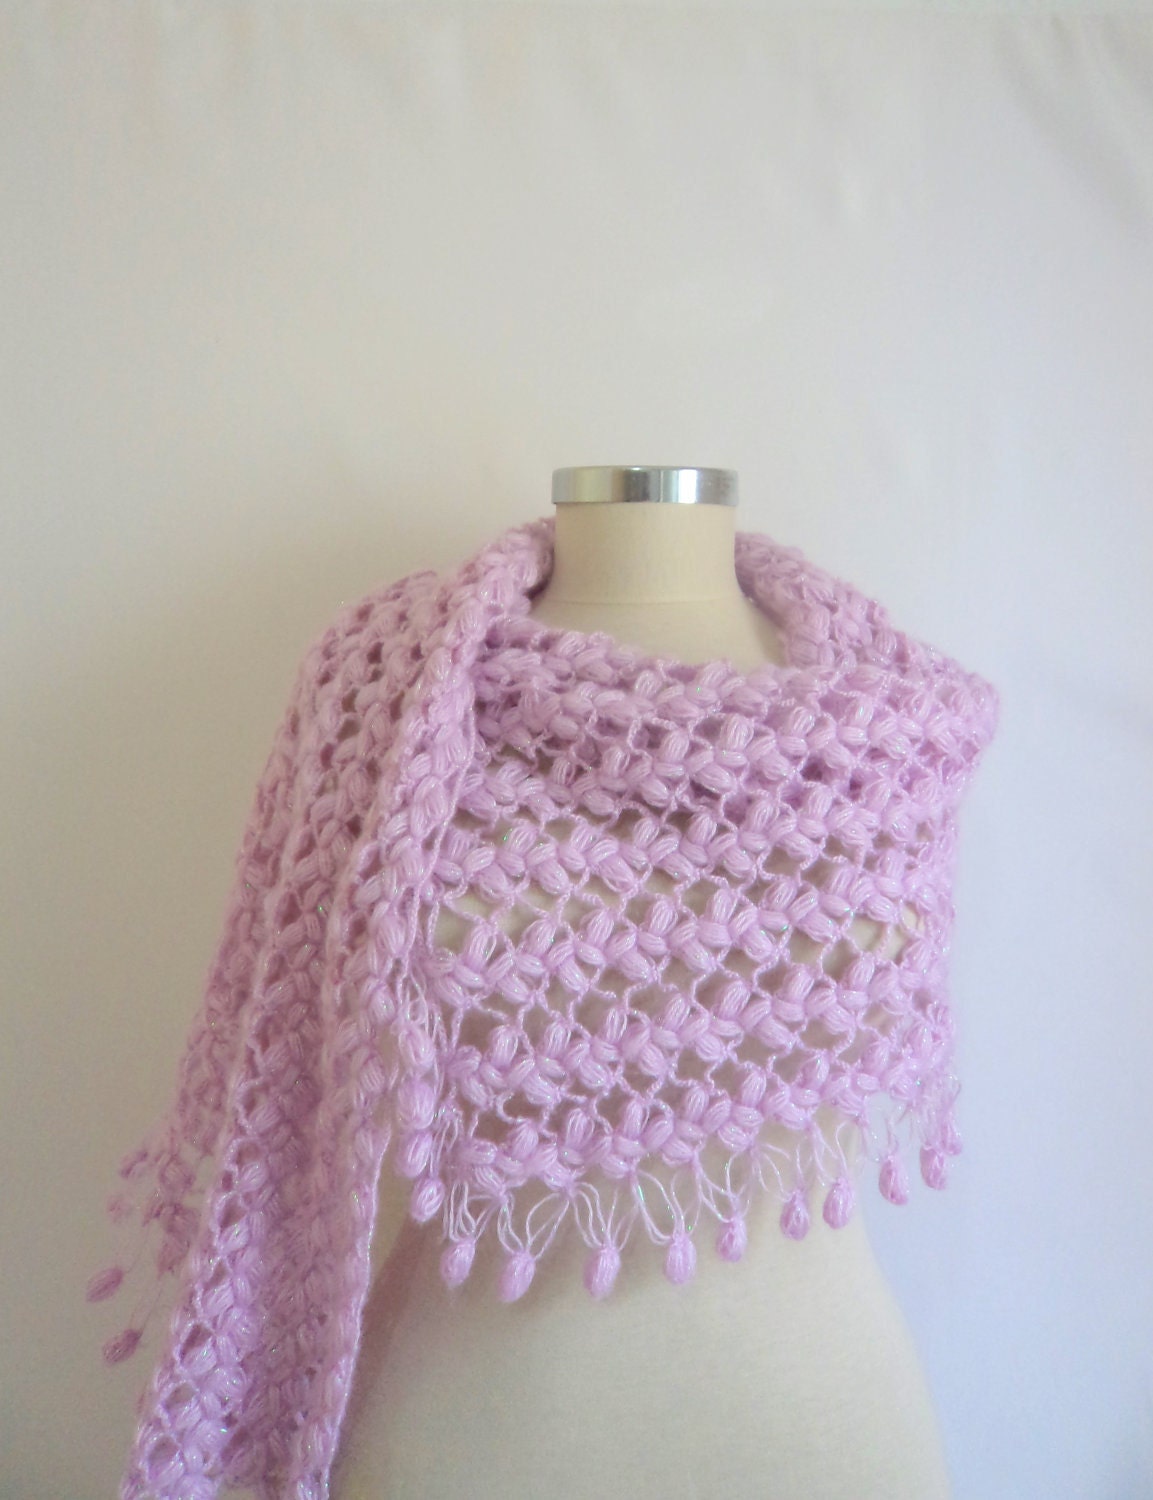 Lilac shawl design new season bolero scarf stole shrug holiday gift,collar,cowl,stole,bolero,gift,handmade,lila,wrap,warm,capelet,